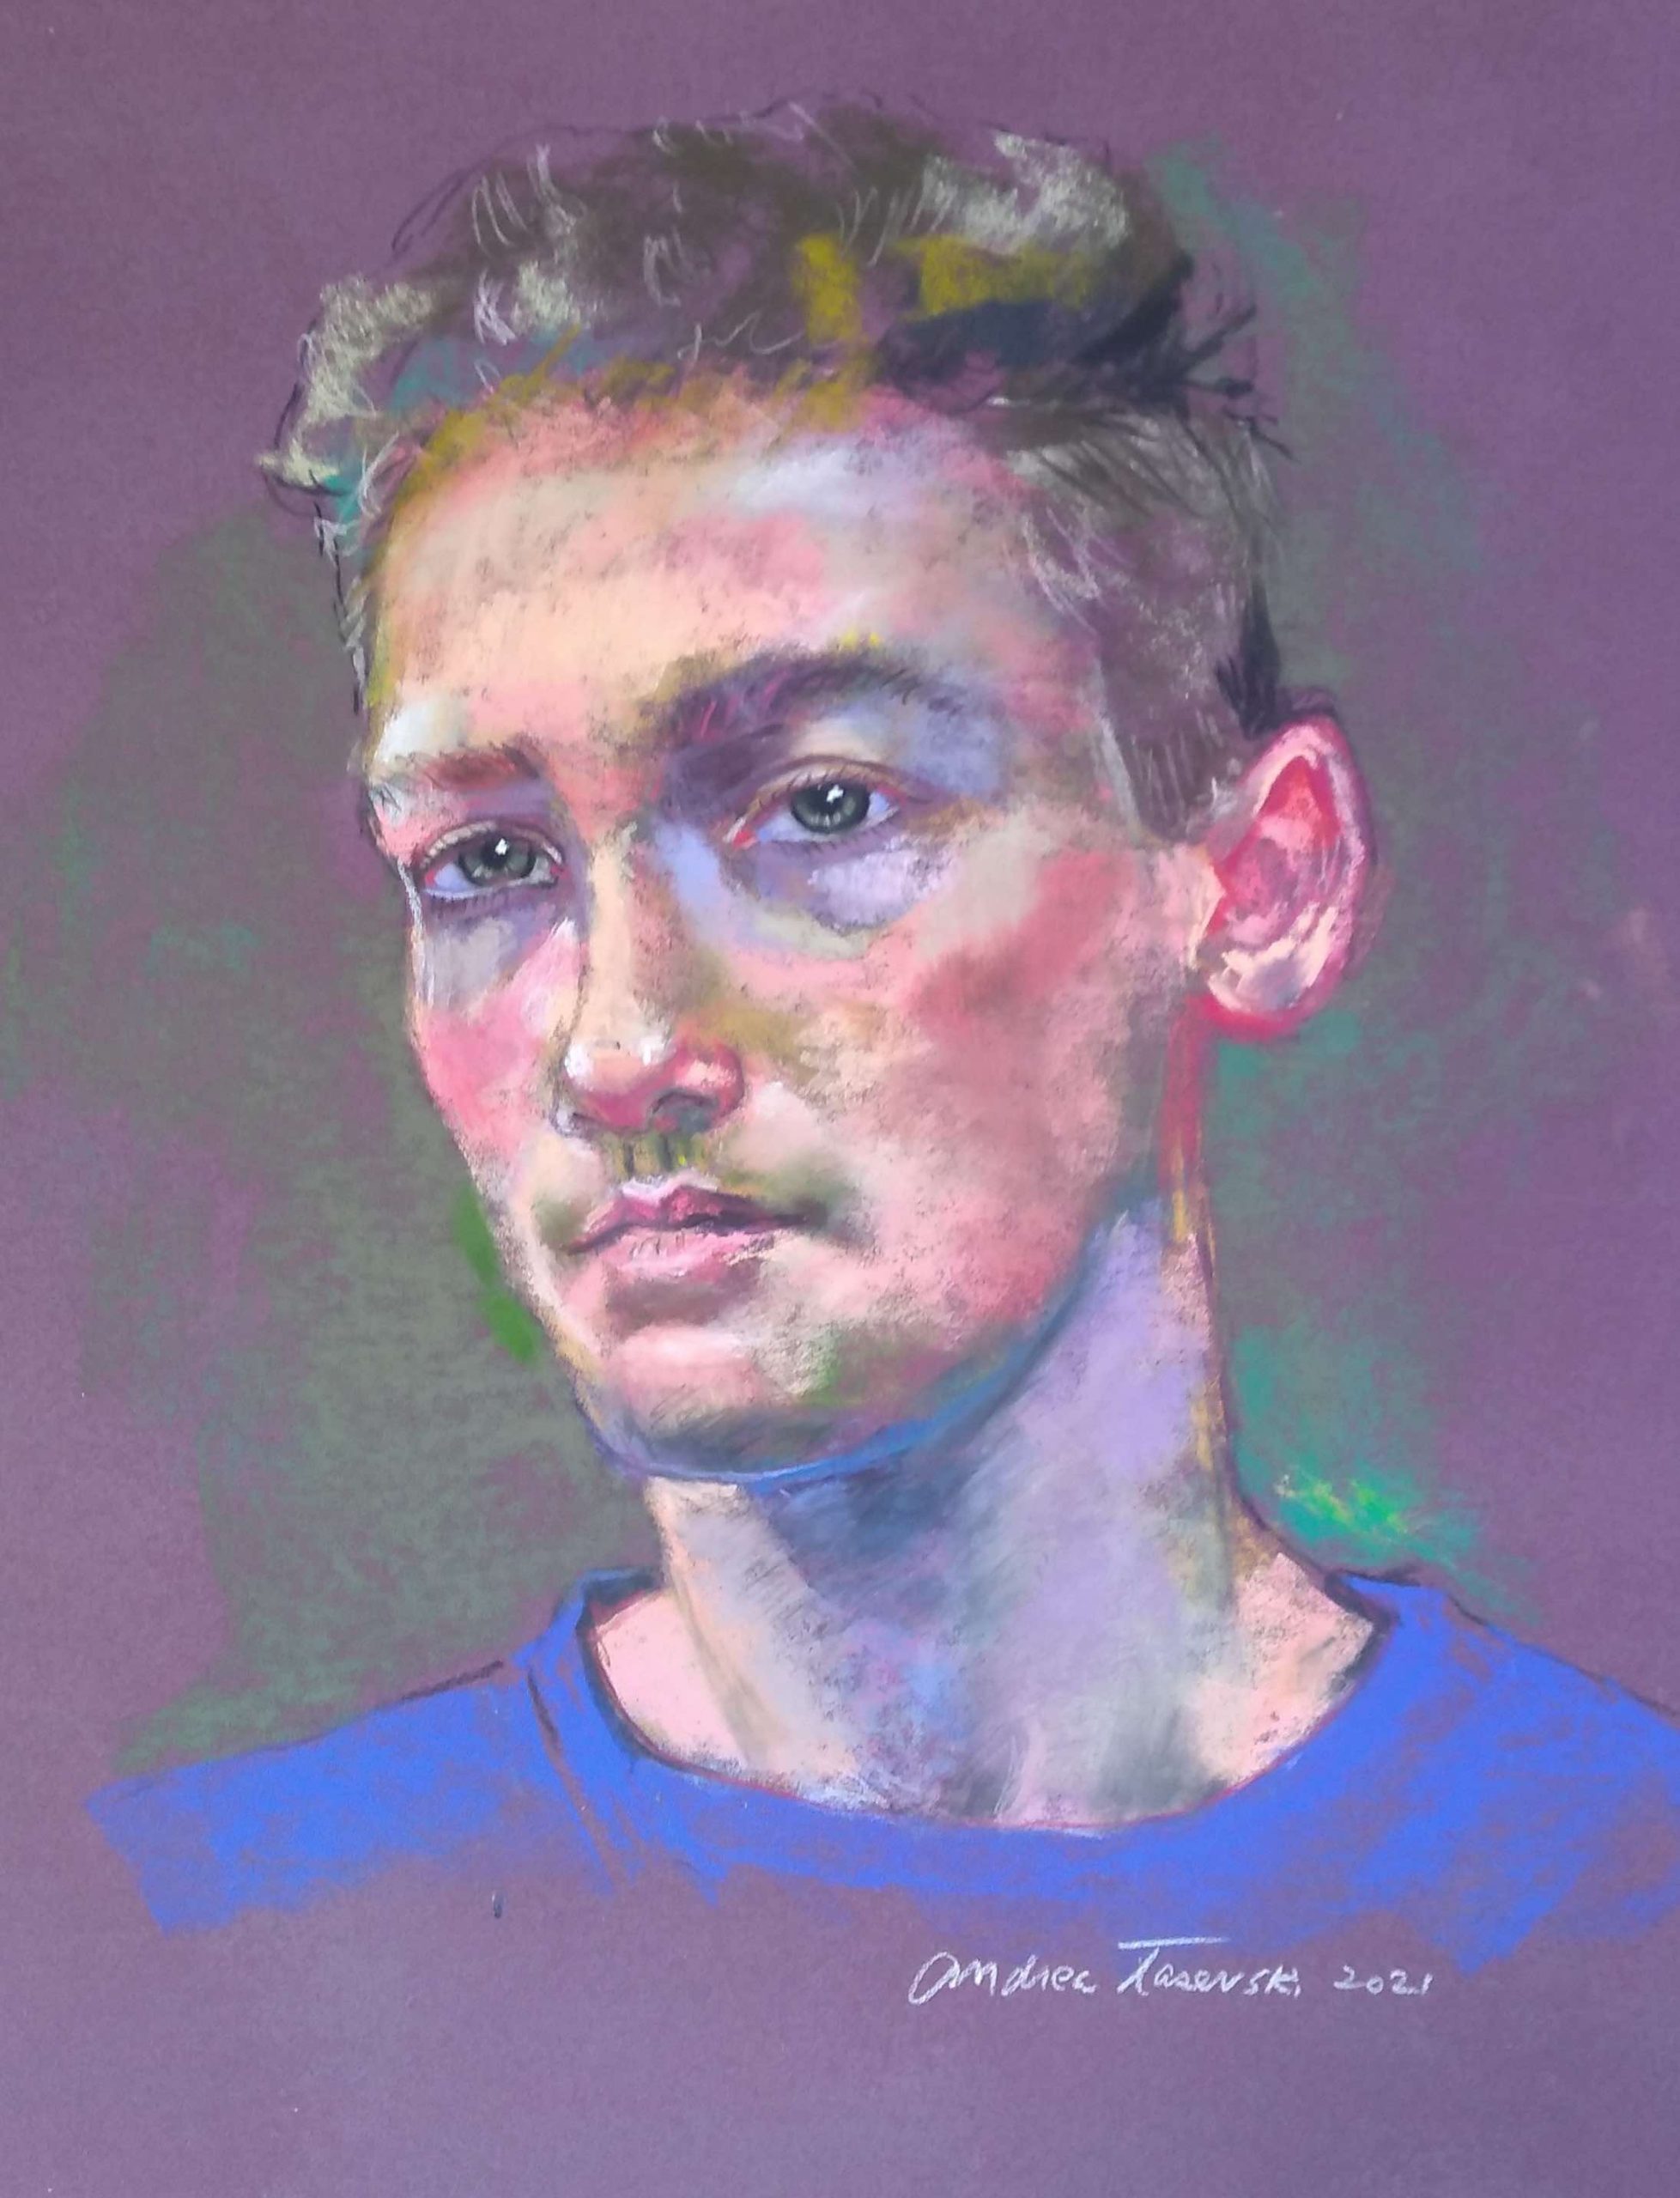 Andrea Tasevski’s portrait “Ryan” garners award by the Pastel Society